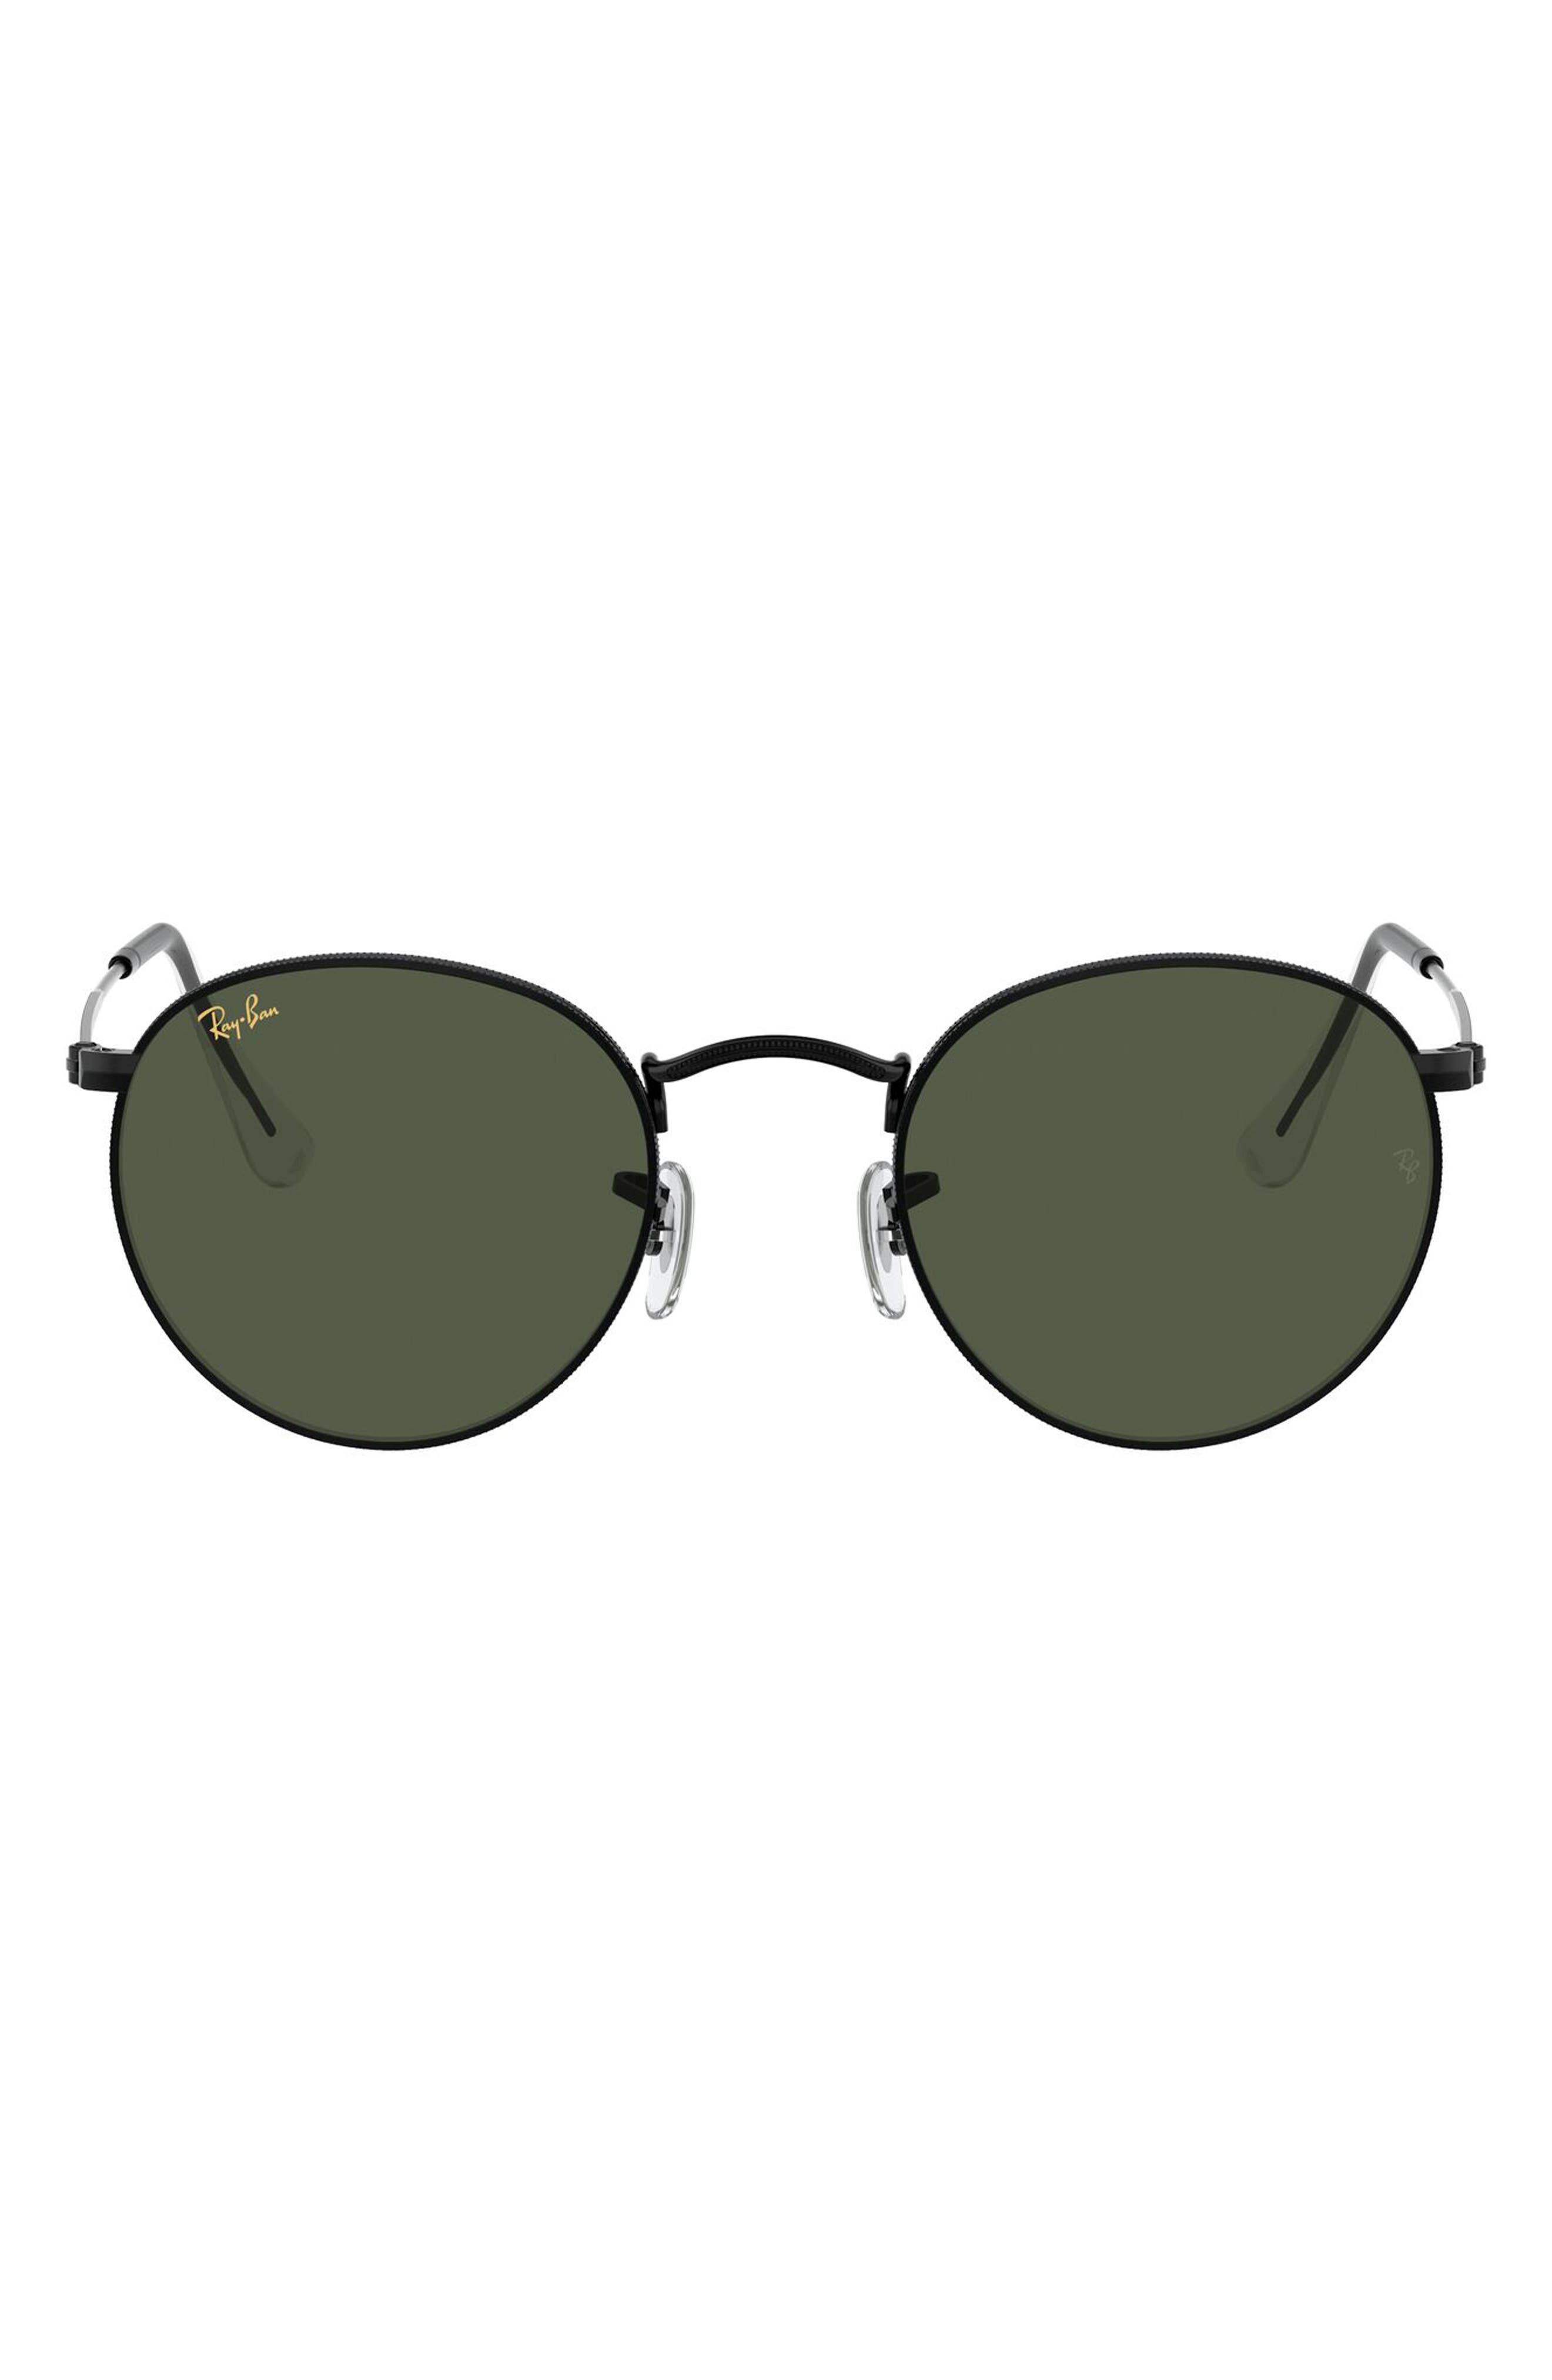 ray ban icons 53mm retro sunglasses